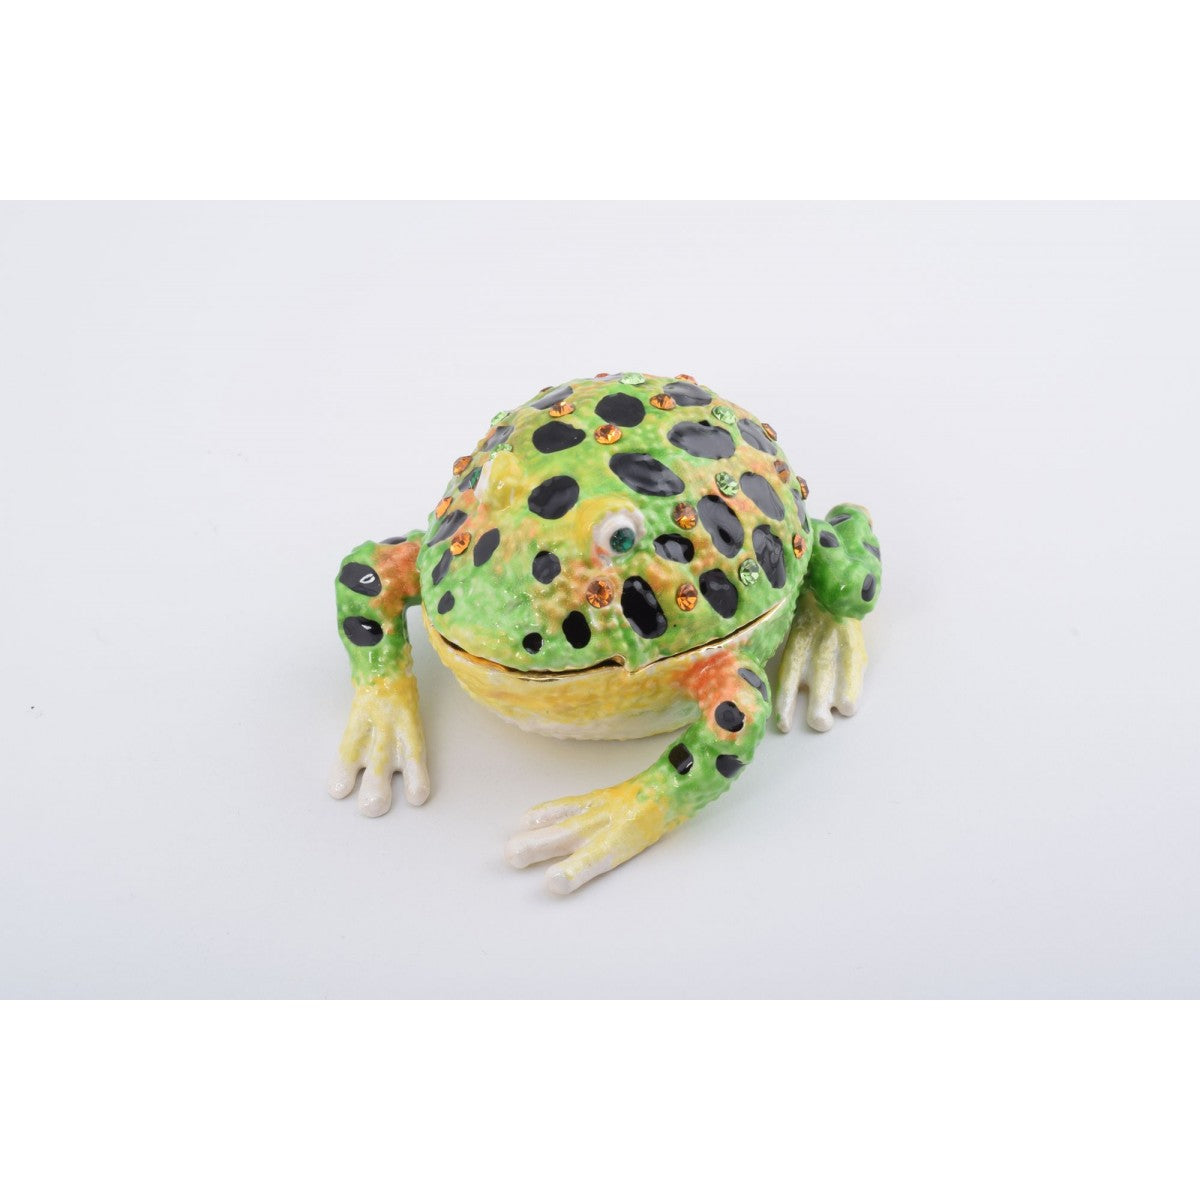 Black Spotted Frog Trinket Box by Keren Kopal